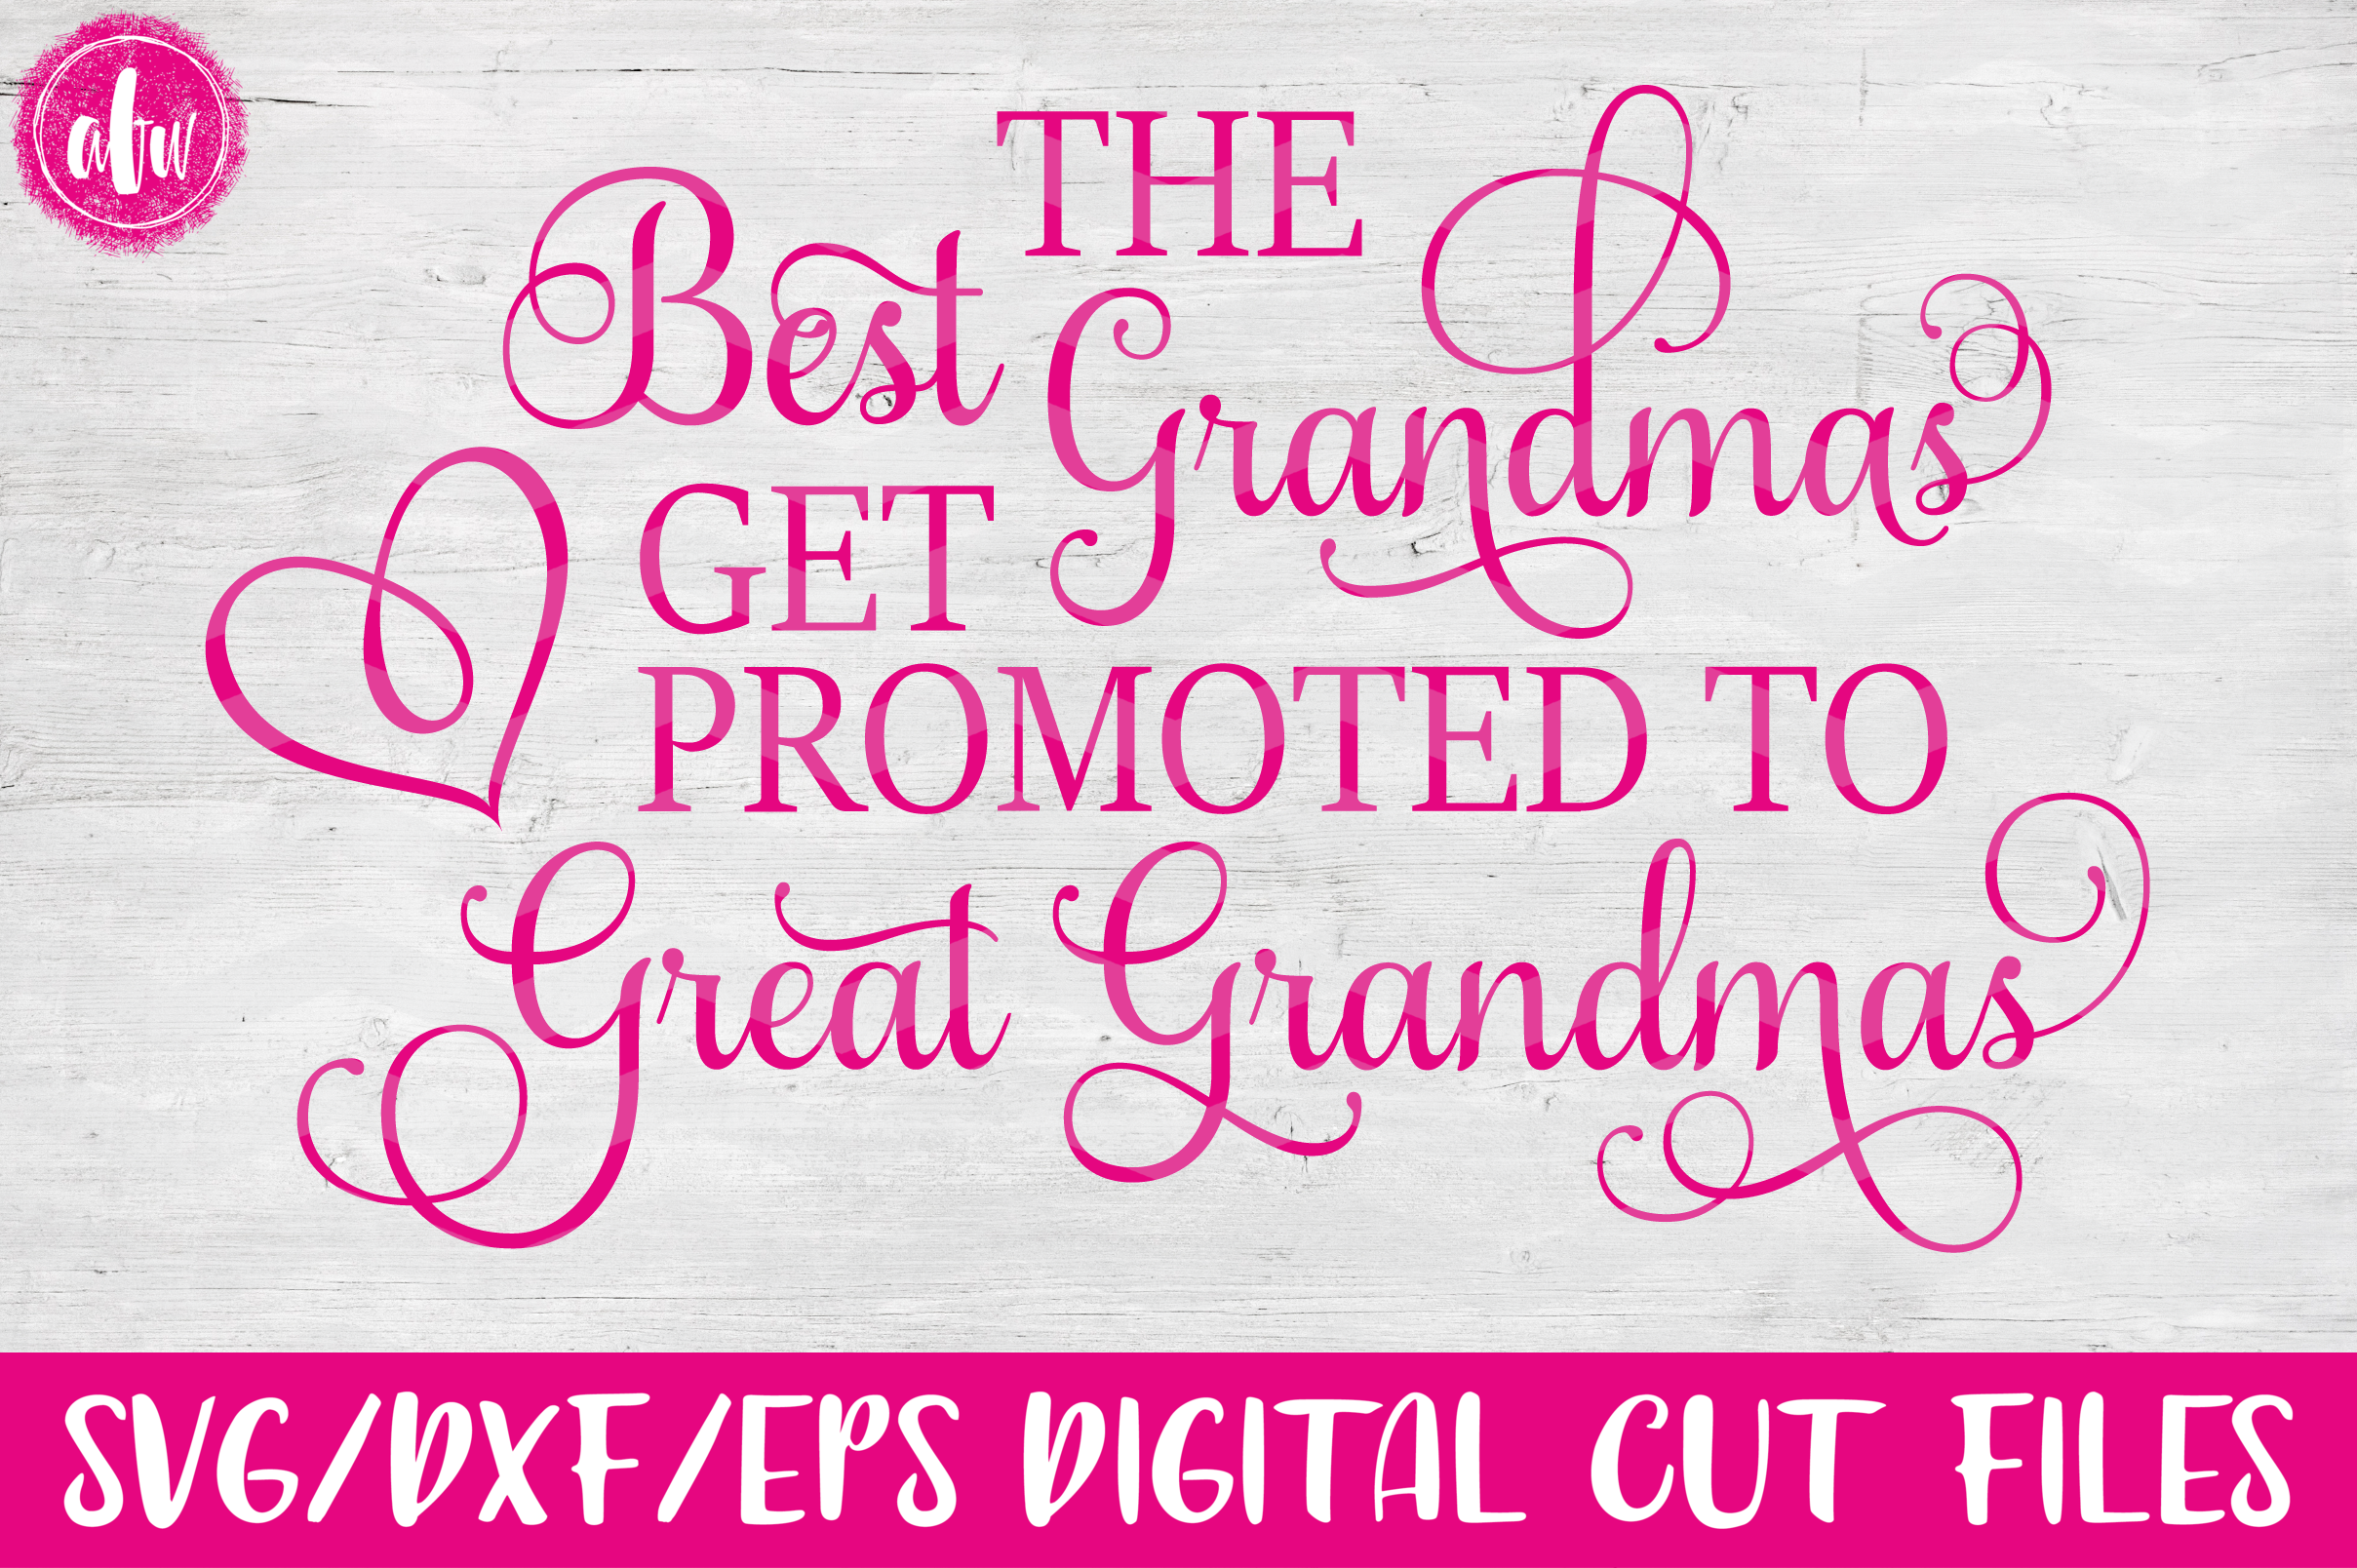 Best Grandmas Get Promoted  SVG, DXF, EPS Cut File (16819)  SVGs